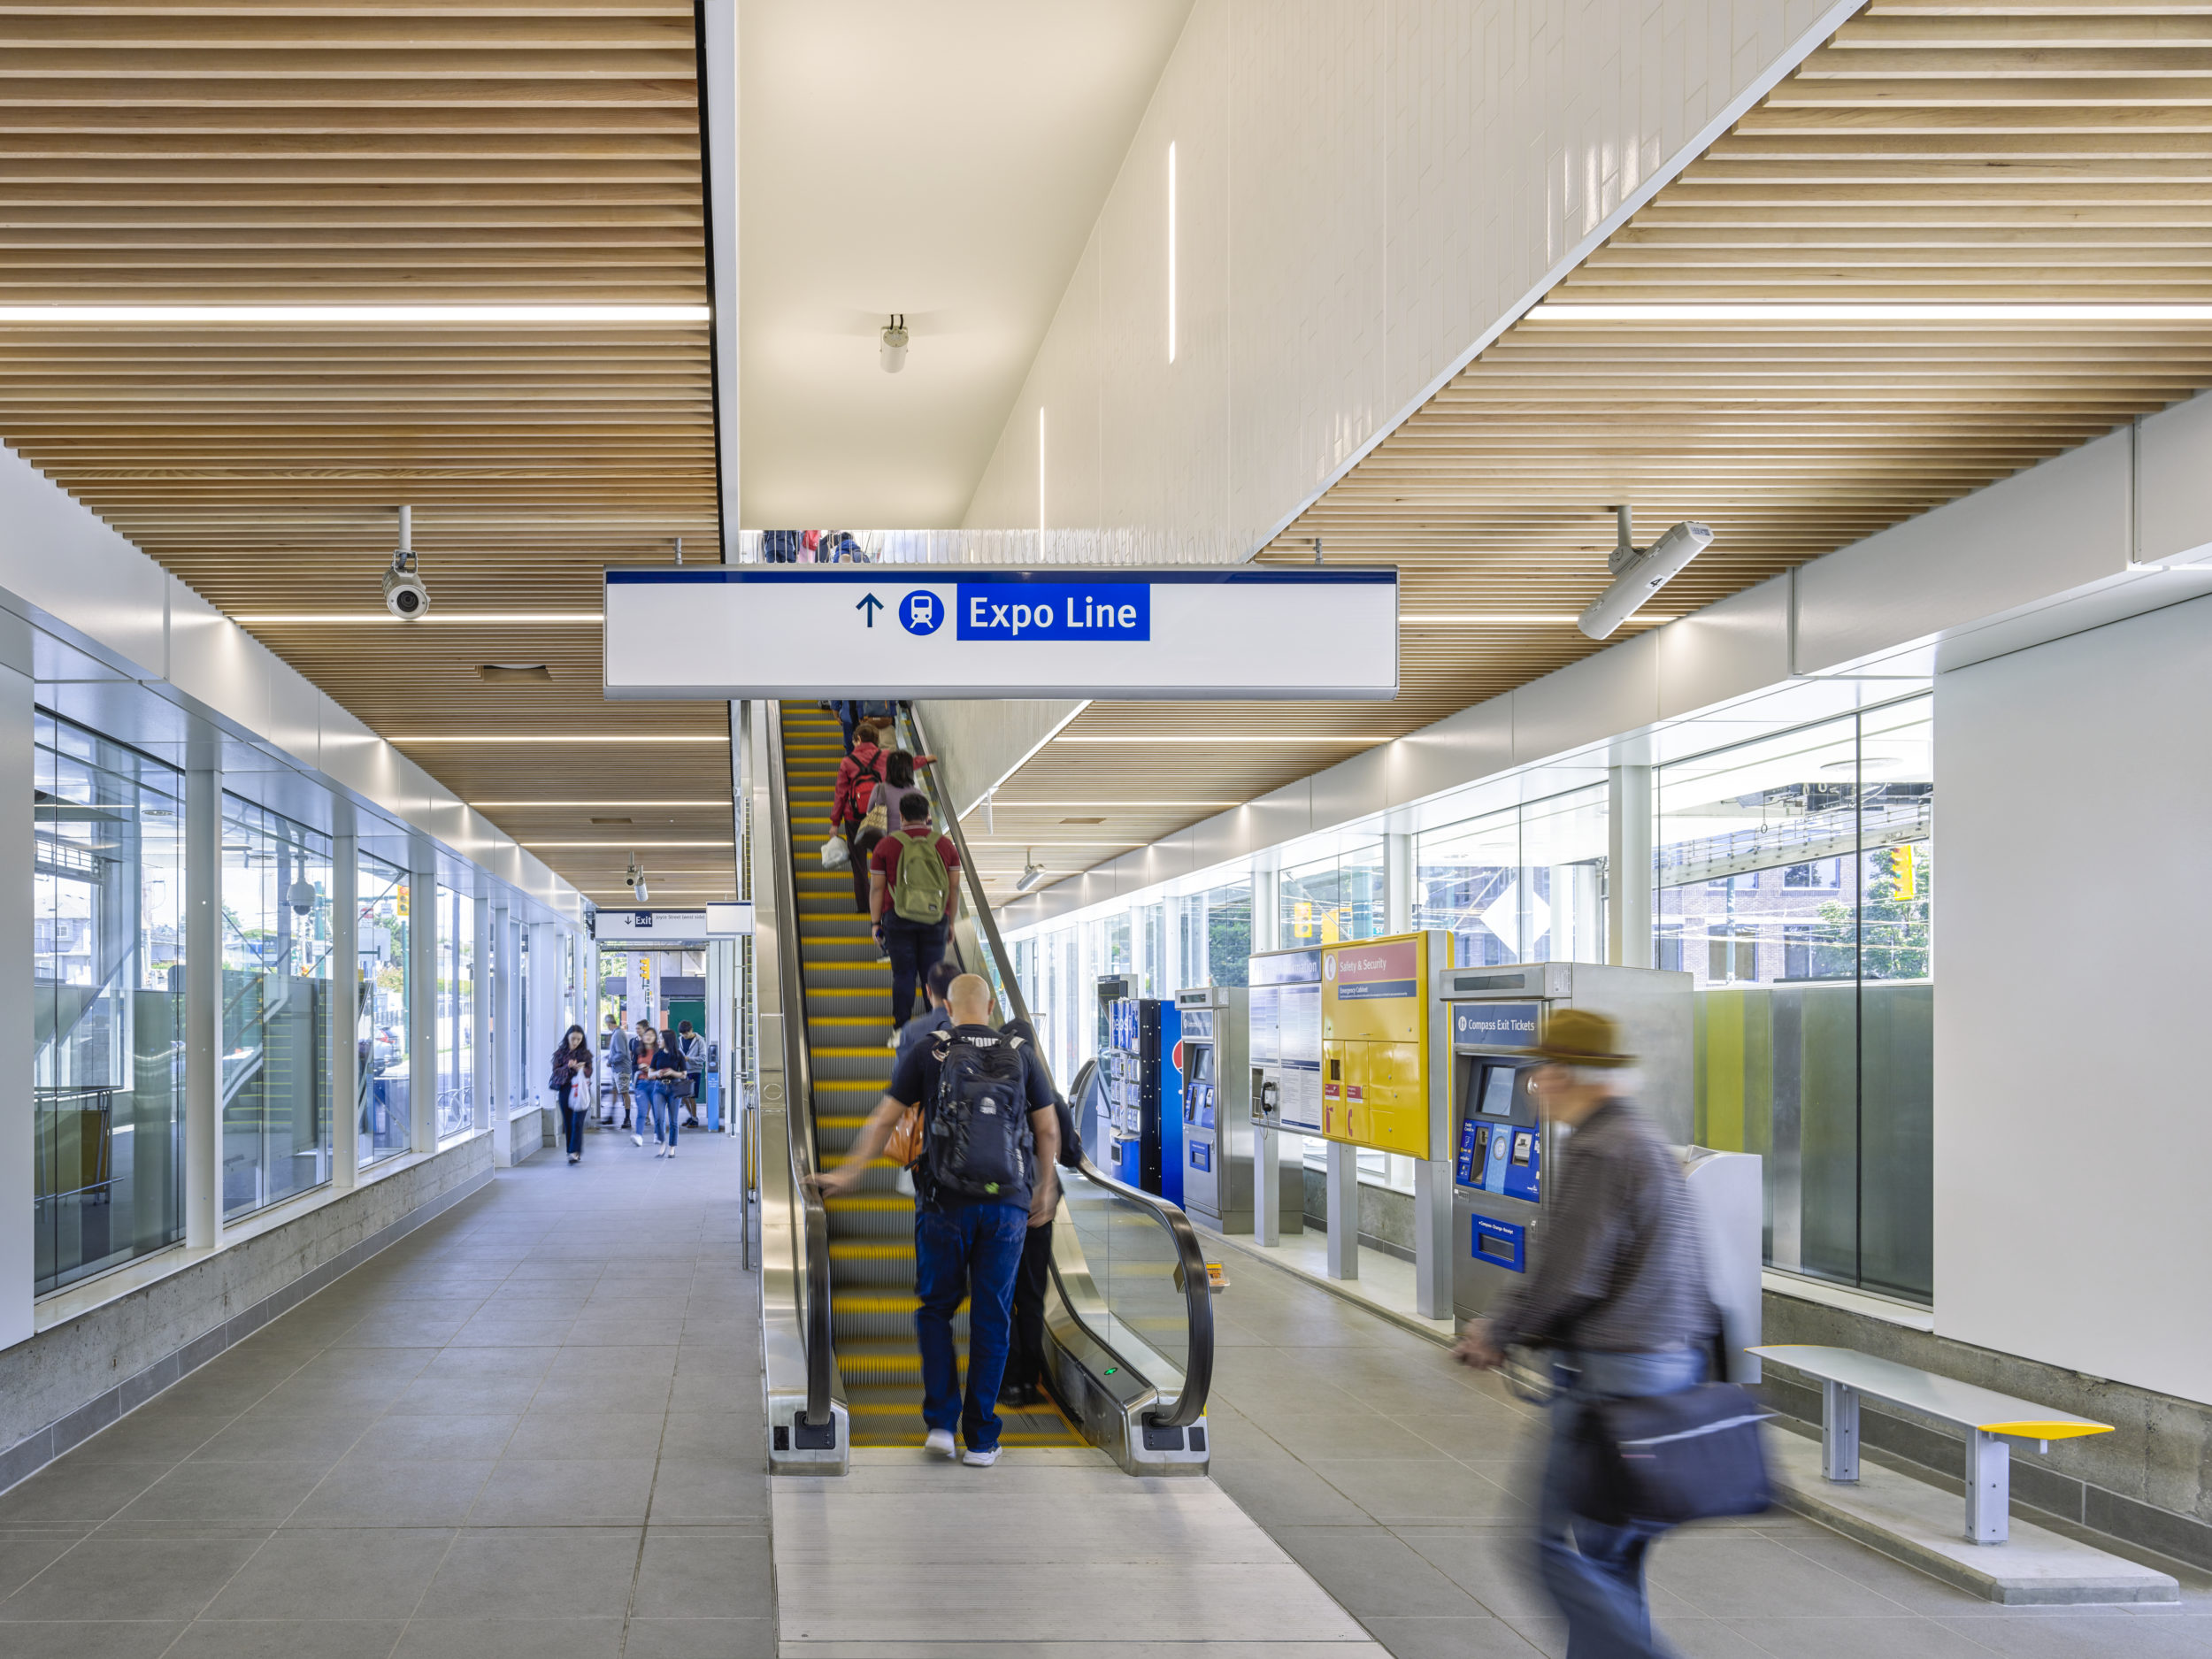 office of mcfarlane biggar architects + designers, Vancouver, BC, Joyce Collingwood SkyTrain Station Upgrades